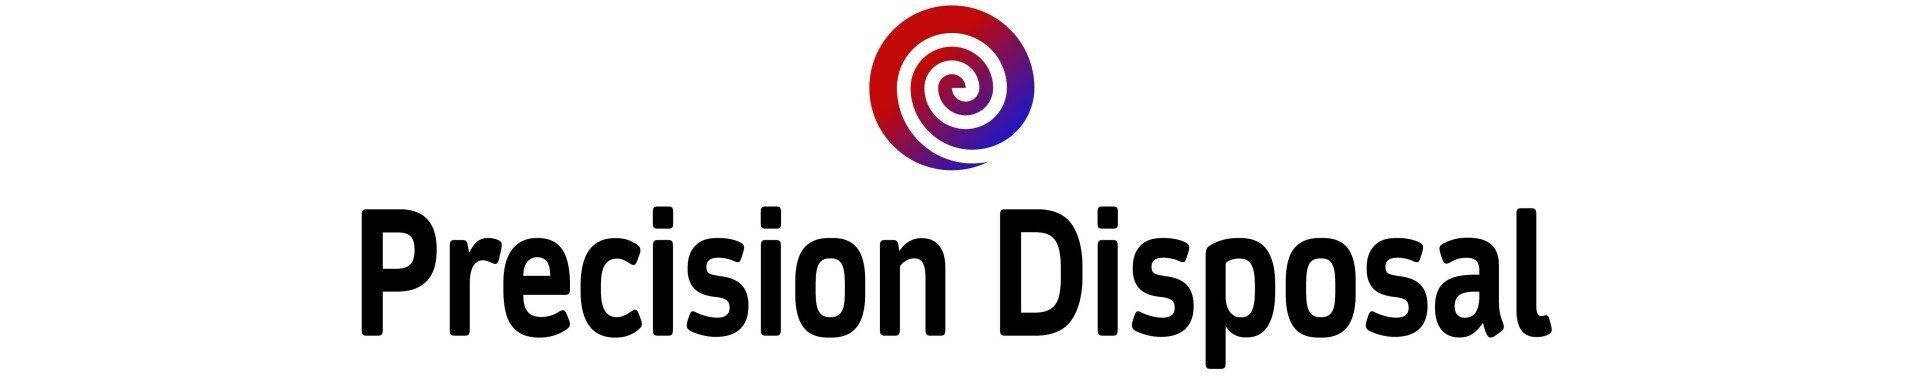 precision disposal logo
